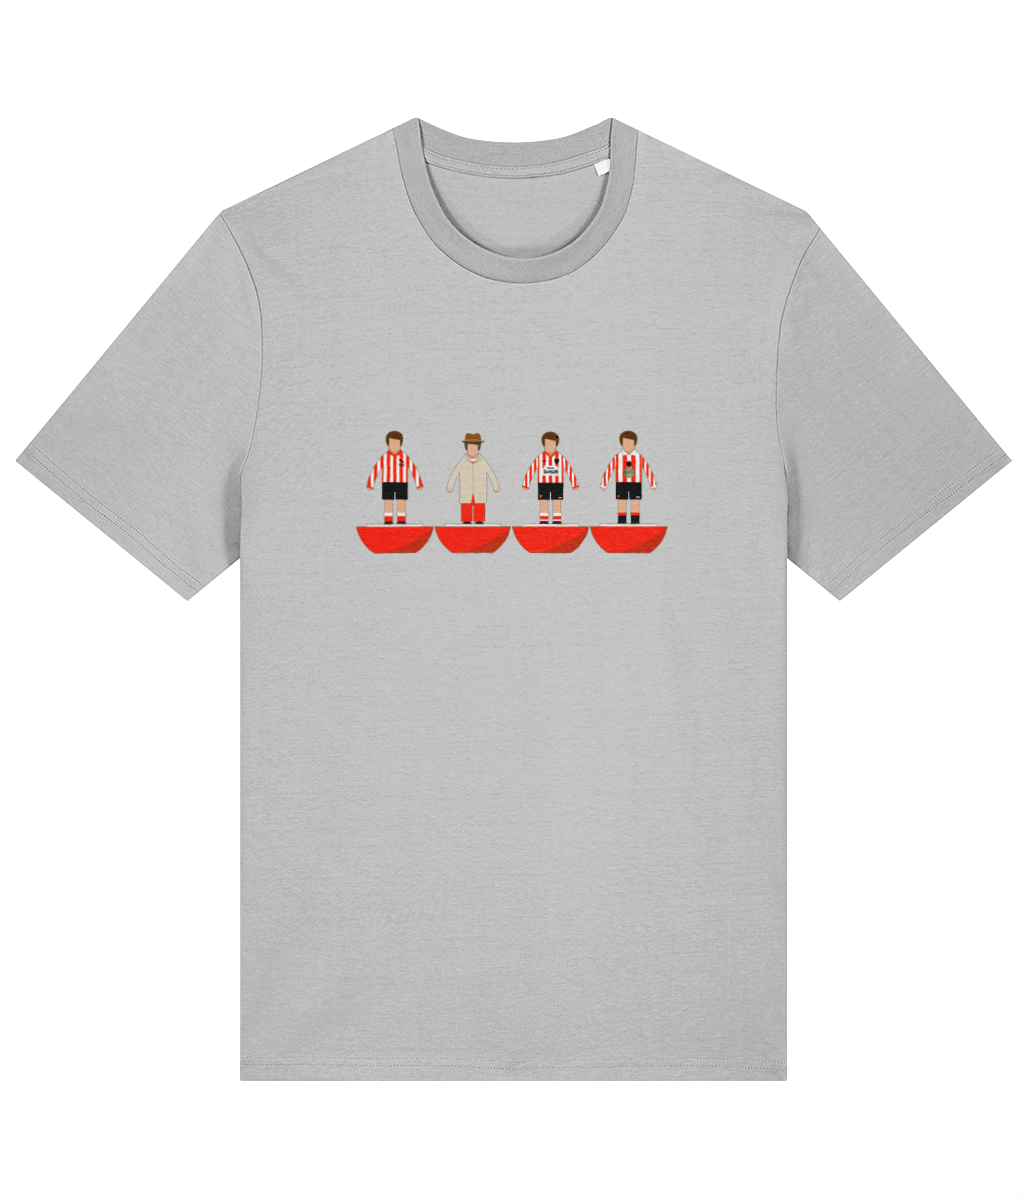 Football Kits 'Sunderland combined' Unisex T-Shirt